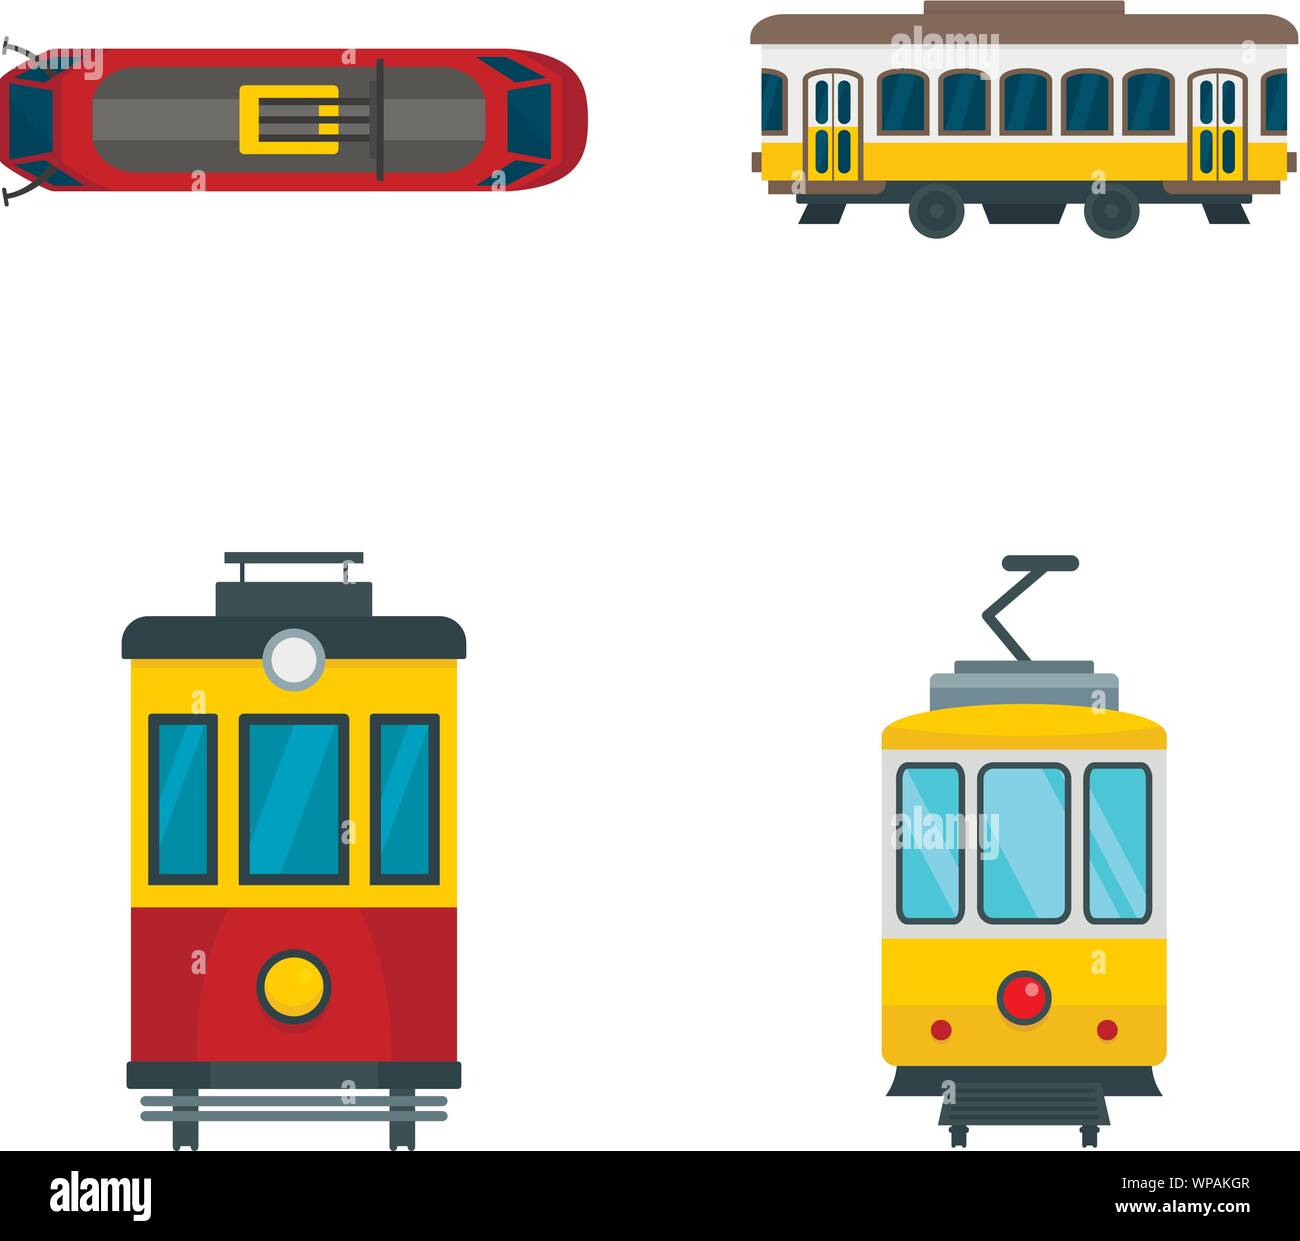 Straßenbahn Icon Set. Flachbild tram Vector Icons für Web Design Stock Vektor